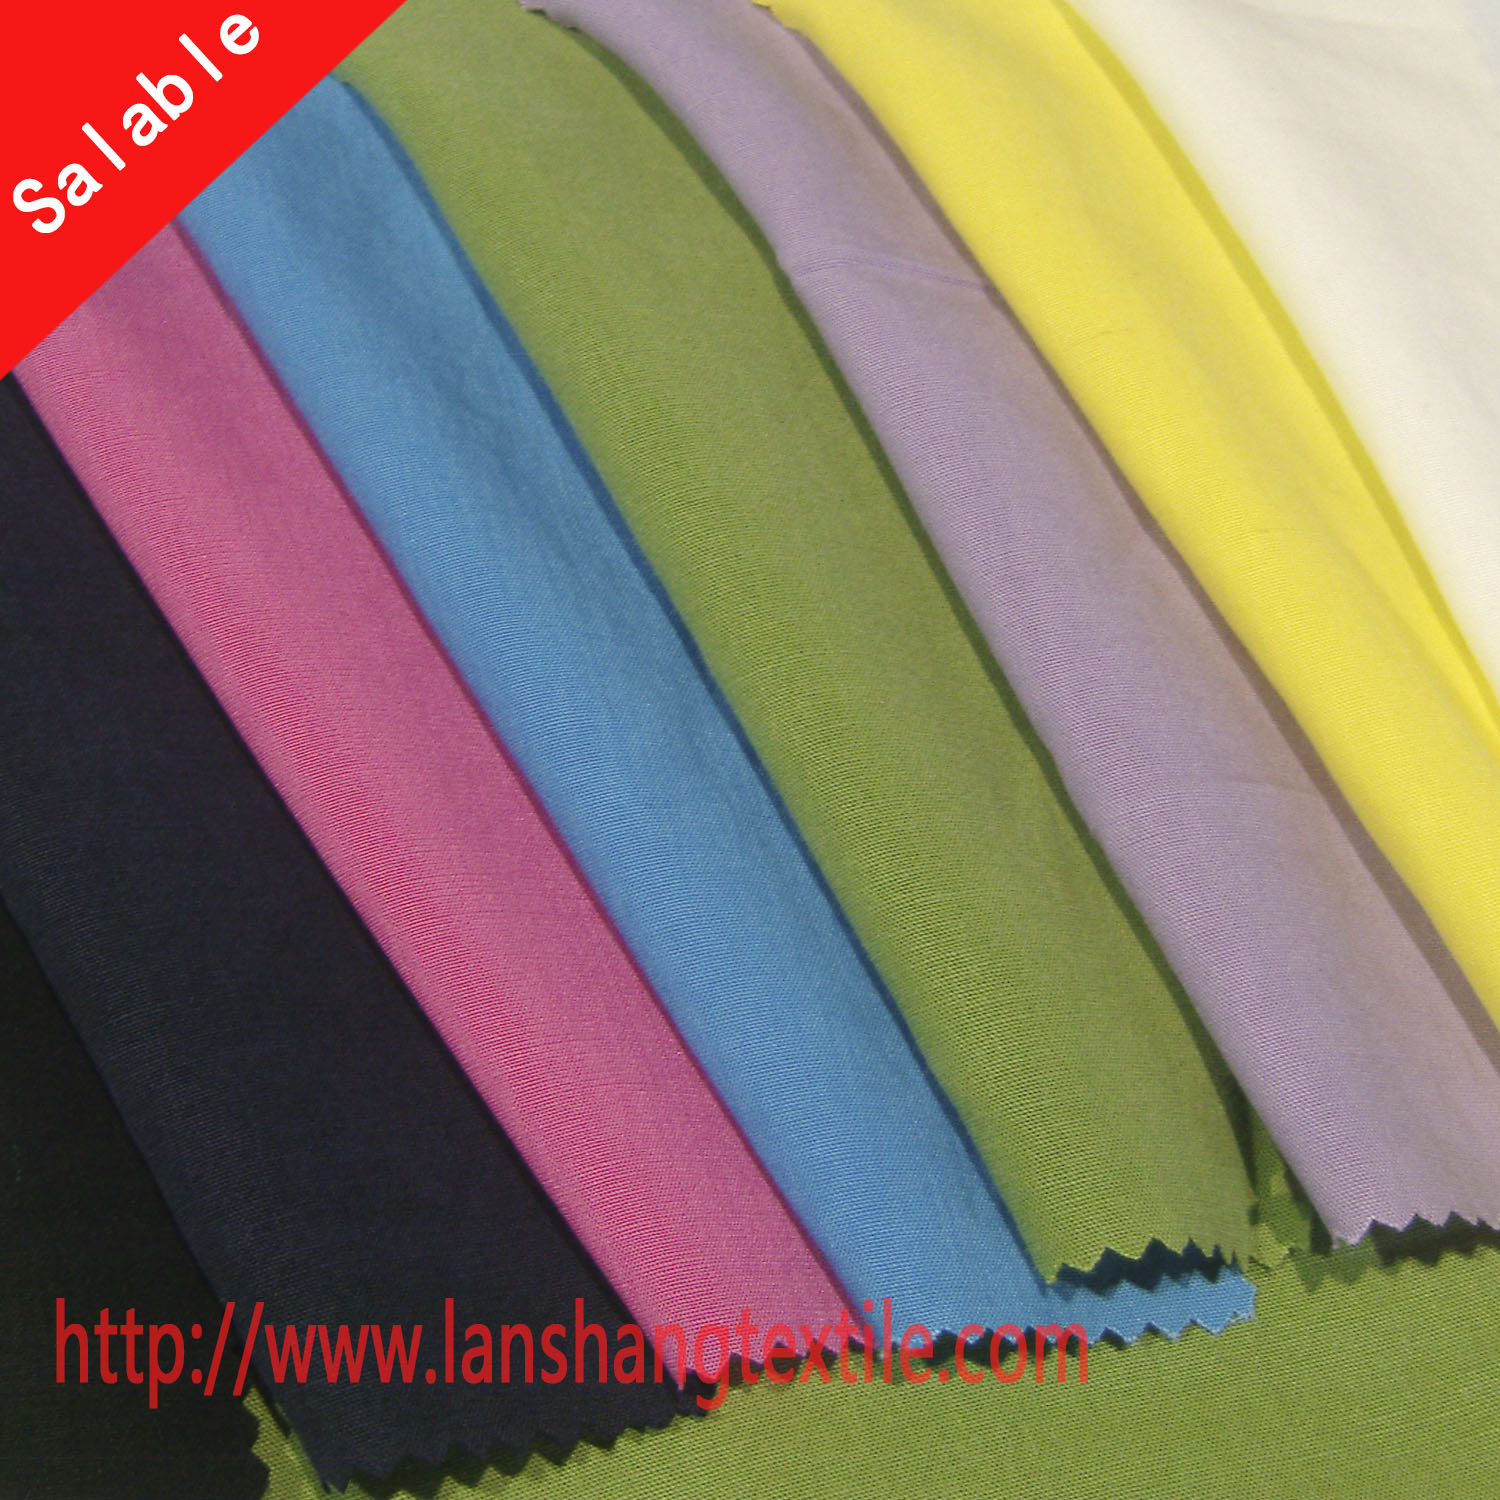 Yarn Dyed Linen Fabric Tencel Fabric for Dress Shirt Skirt Garment